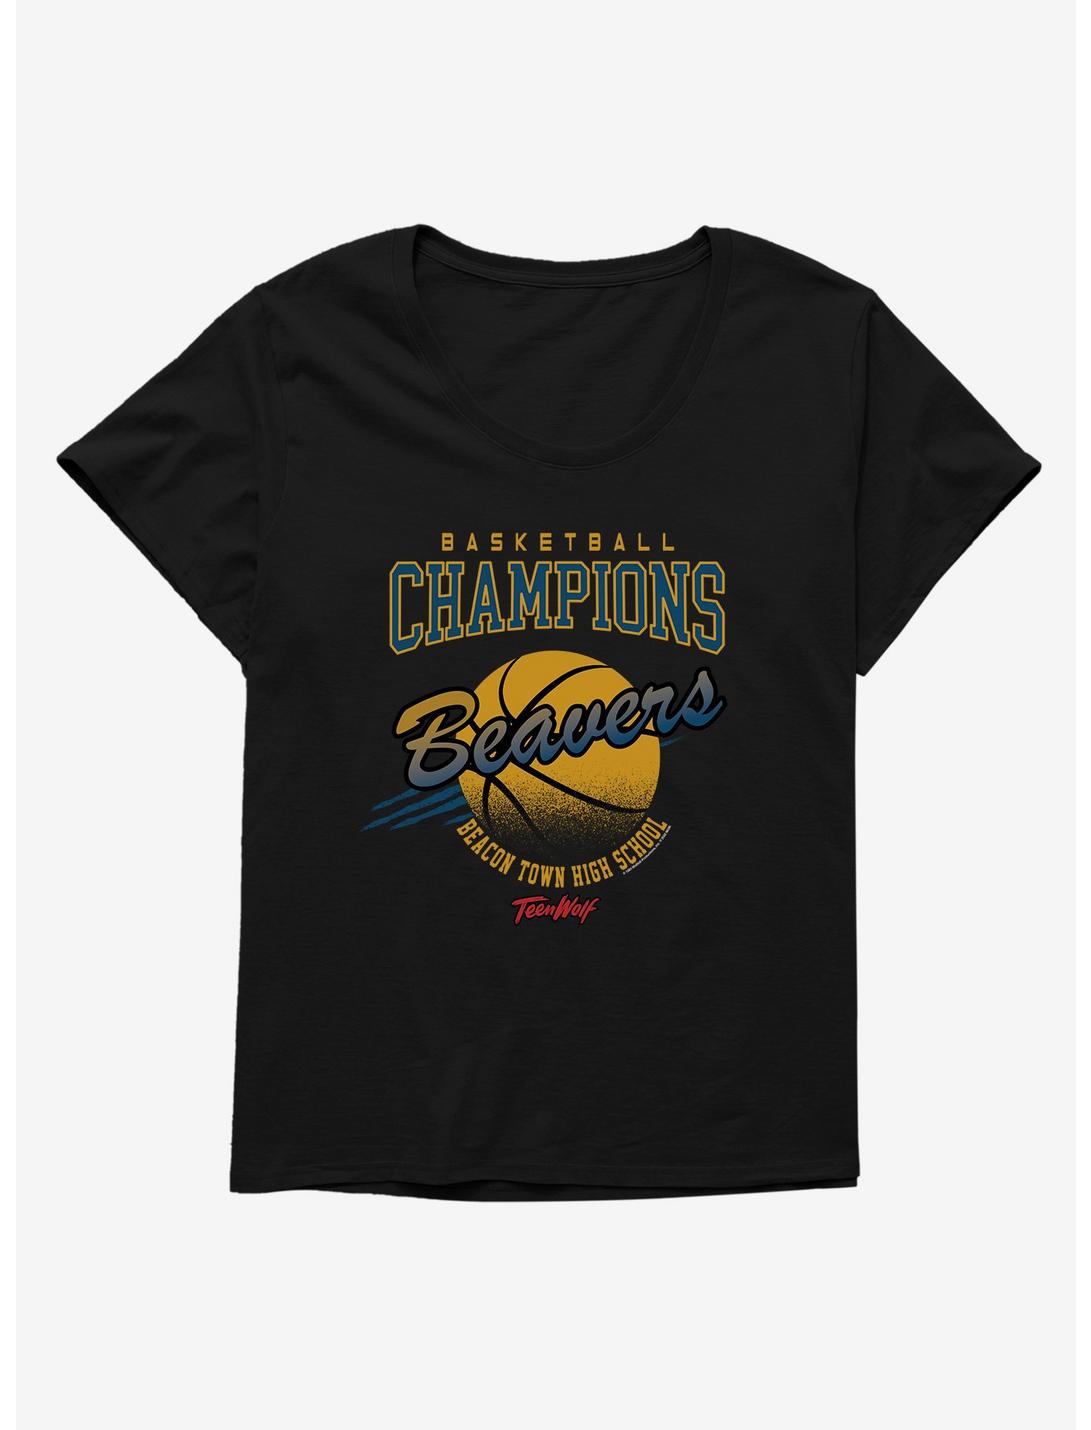 Teen Wolf Basketball Champions Womens T-Shirt Plus Size, BLACK, hi-res